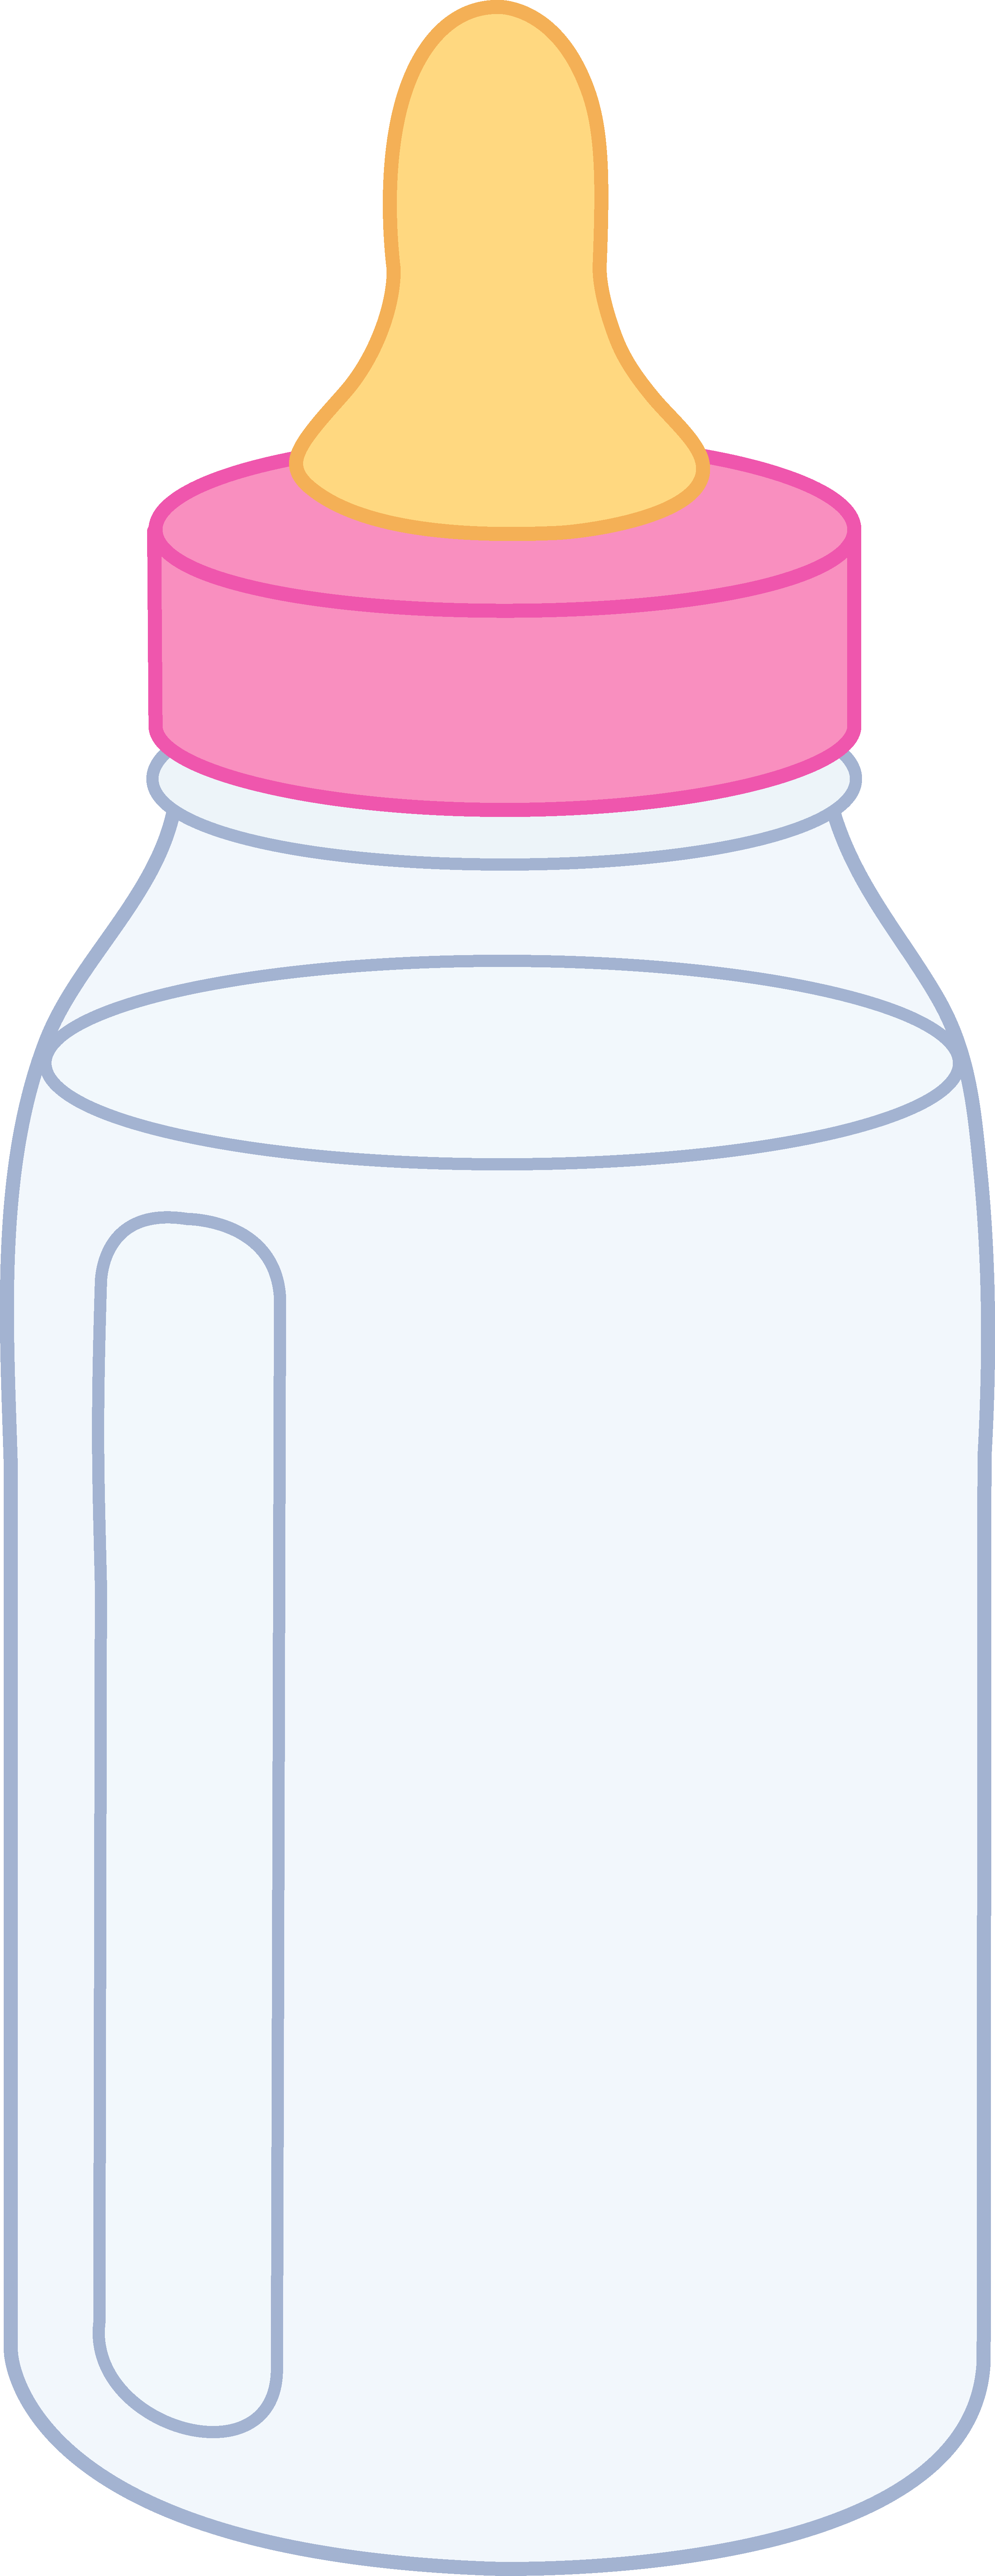 Feeding Bottle Cartoon Images - Baby Bottles Clipart | Bodbocwasuon